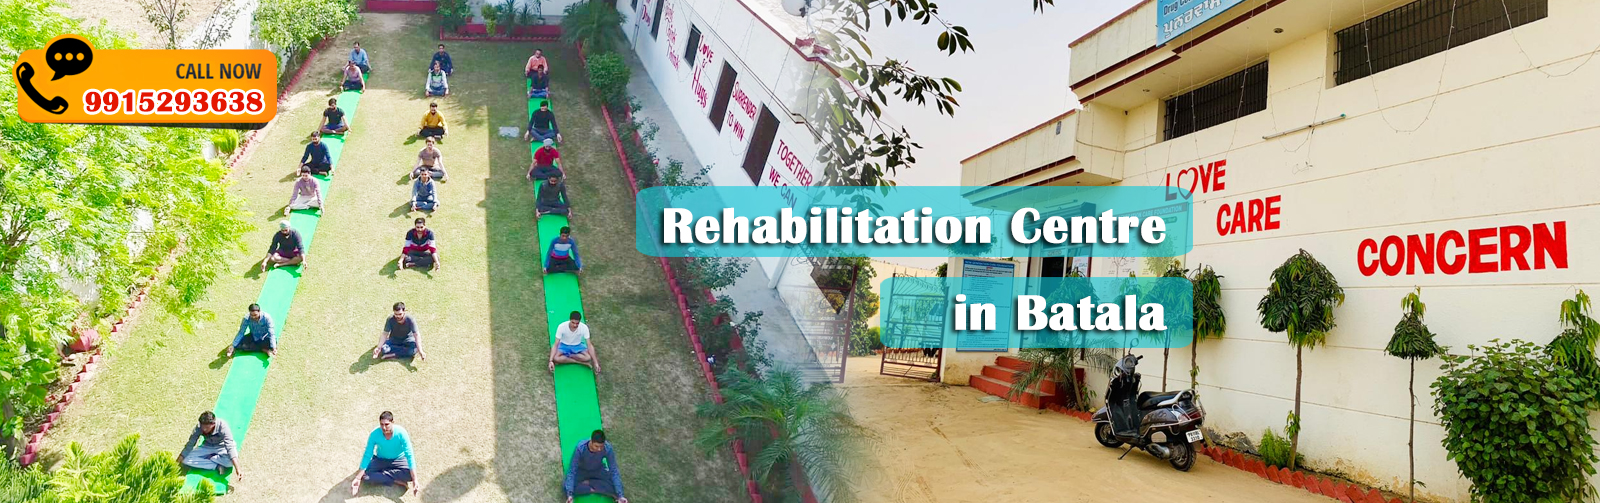 Rehabilitation Centre in Batala